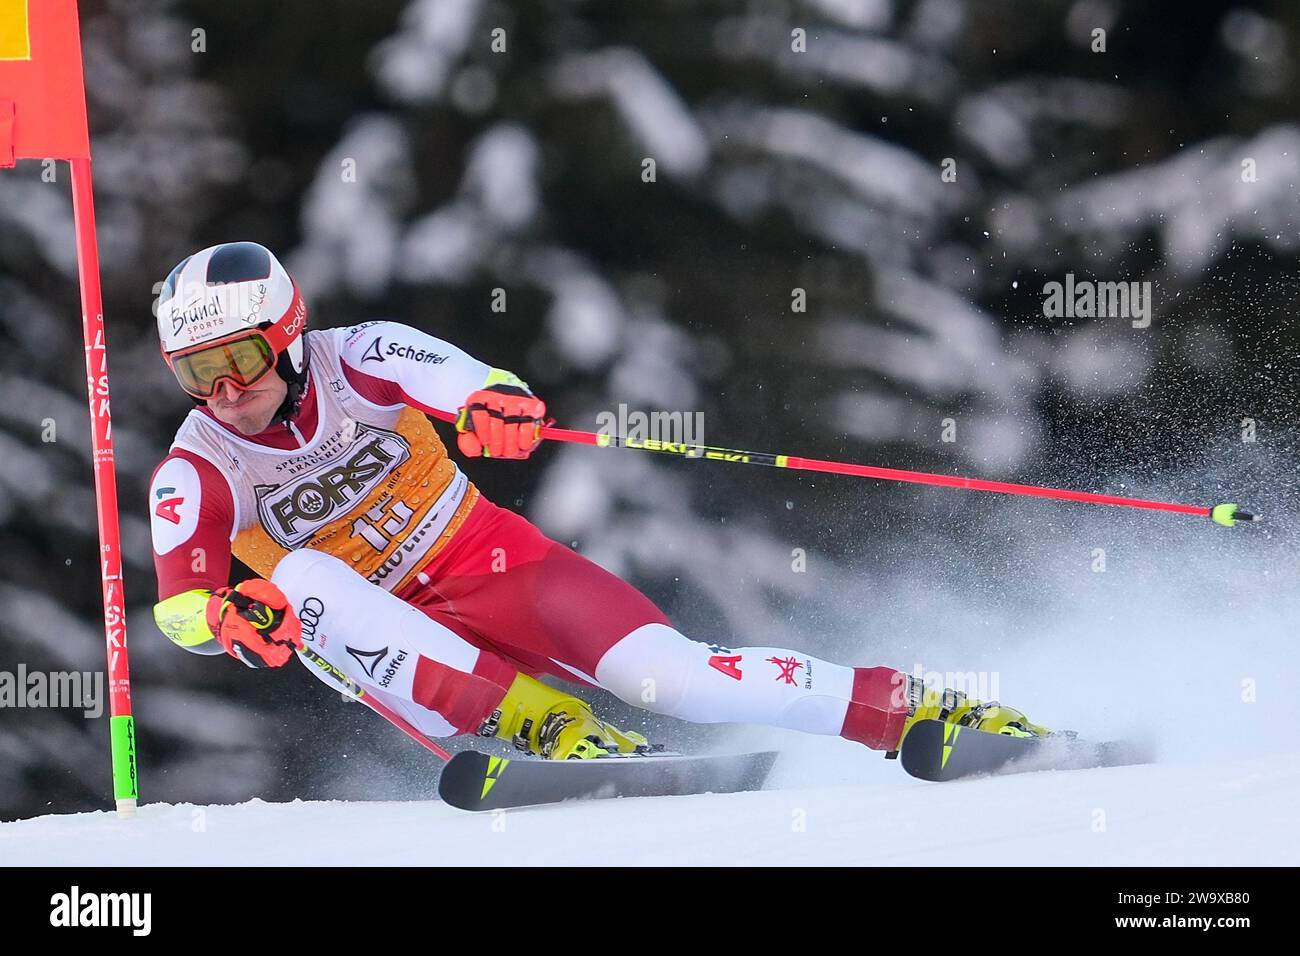 Stefan Brennsteiner (AUT) competes during the Audi FIS Alpine Ski World Cup, MenÕs Giant Slalom race on Gran Risa Slope, Alta Badia on December 17, 20 Stock Photo